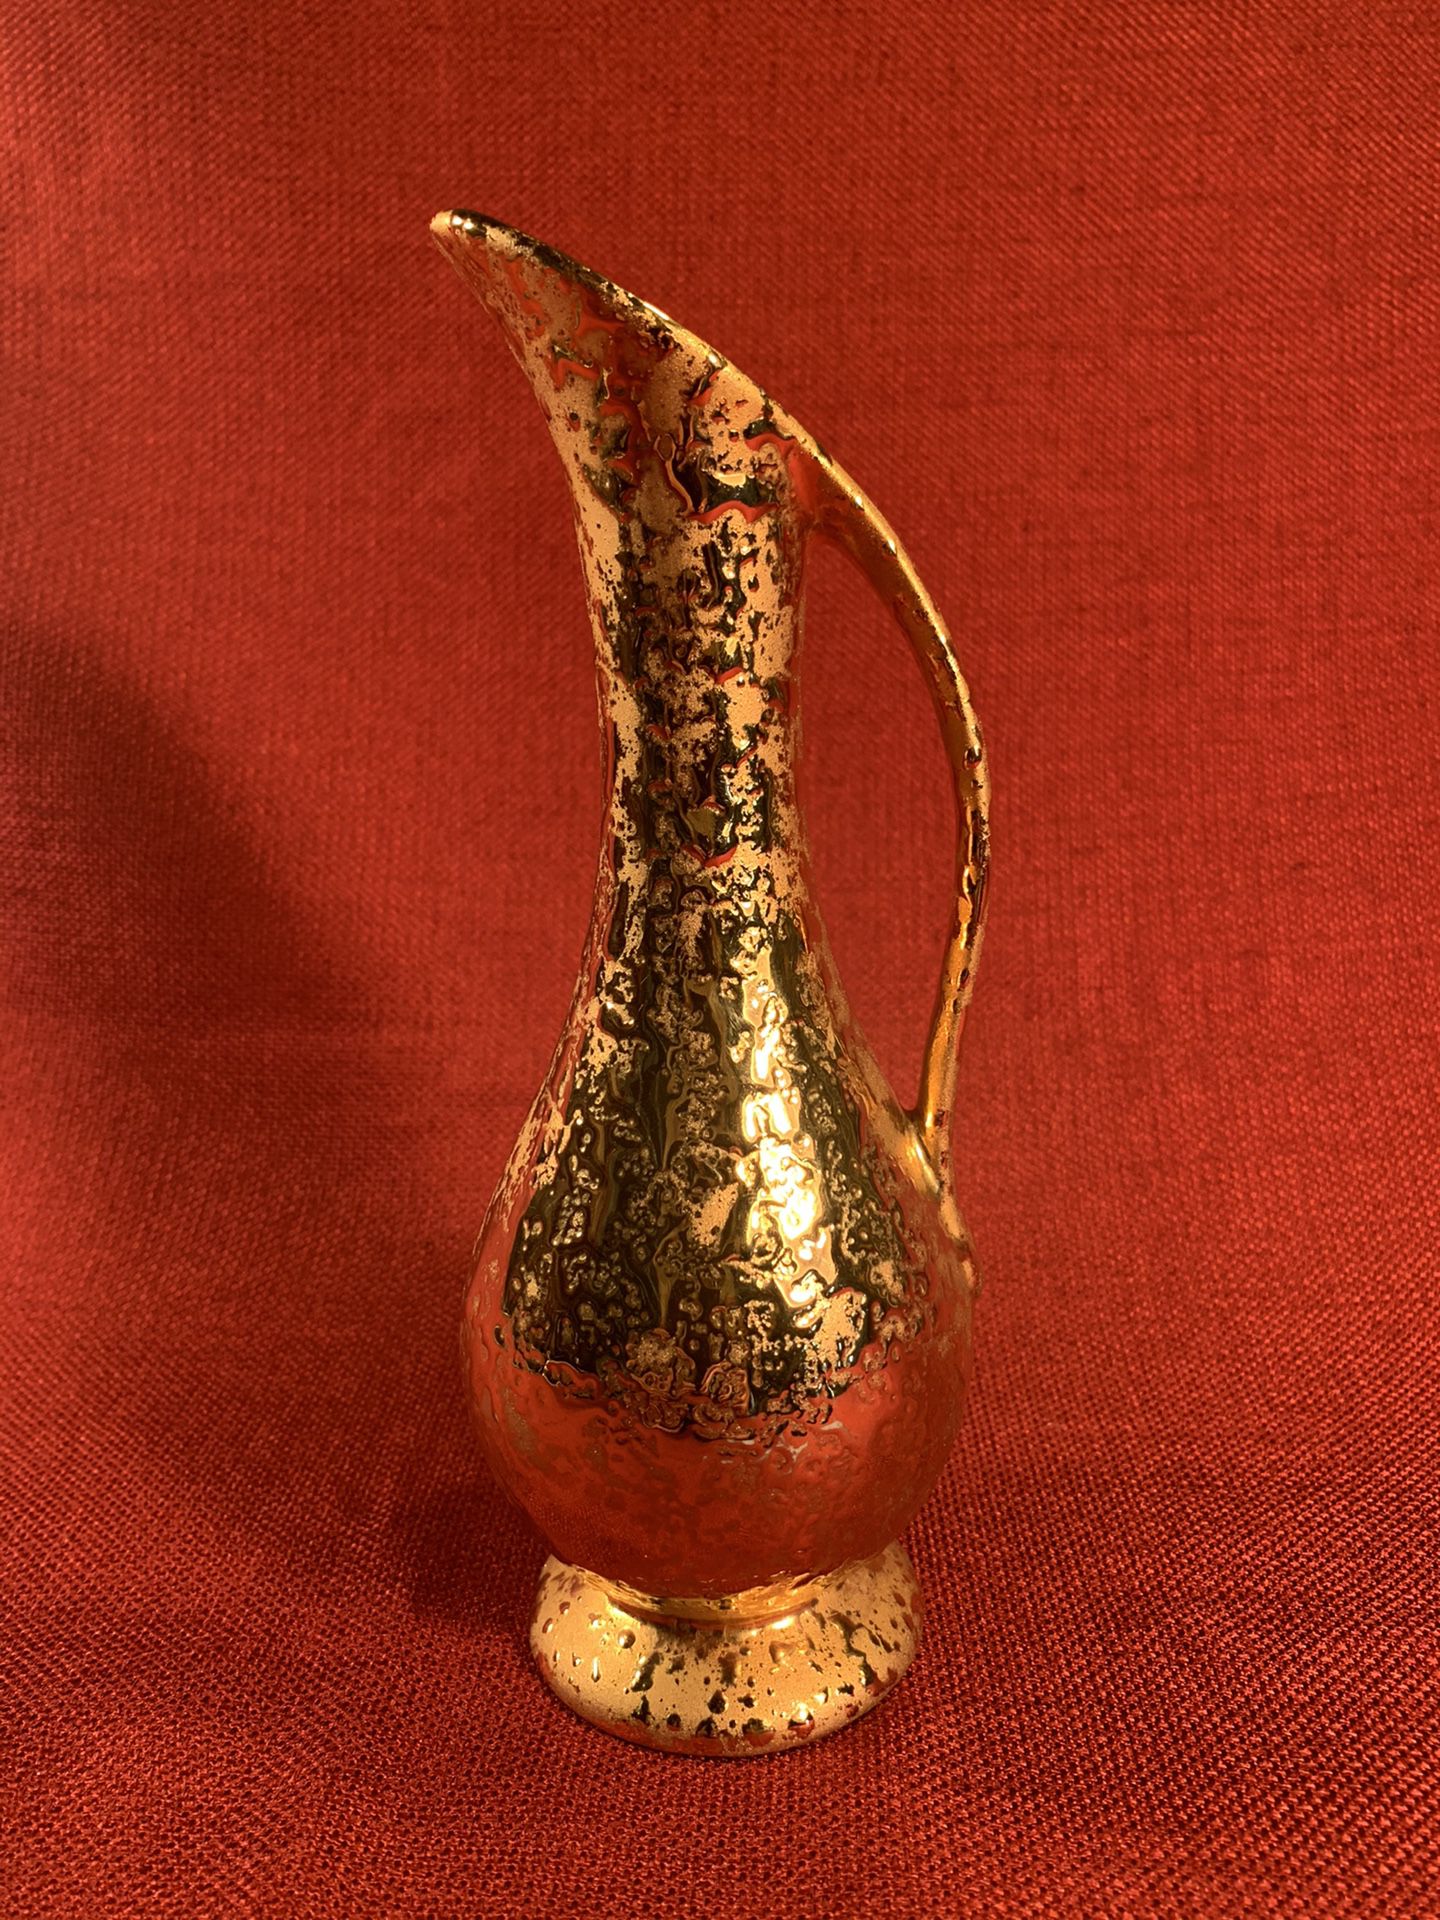 DIXON ART STUDIOS Vintage Weeping 22K-Gold Handled Vase (Height: 8-1/4”)